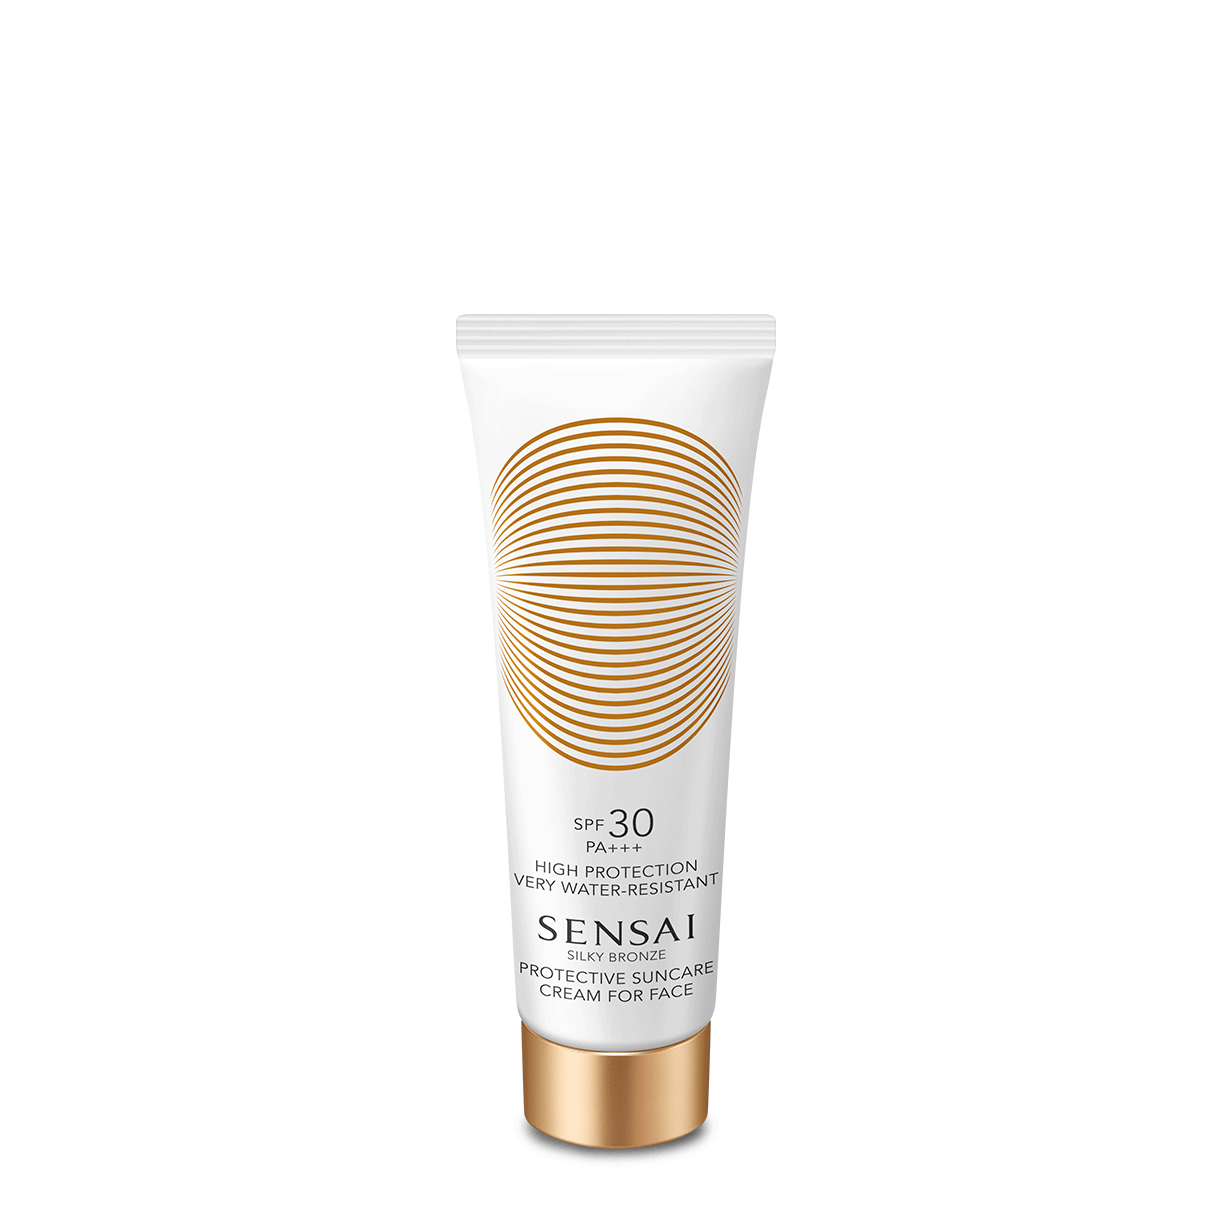 Silky Bronze Protective Suncare Cream For Face LSF 30 | 50ml